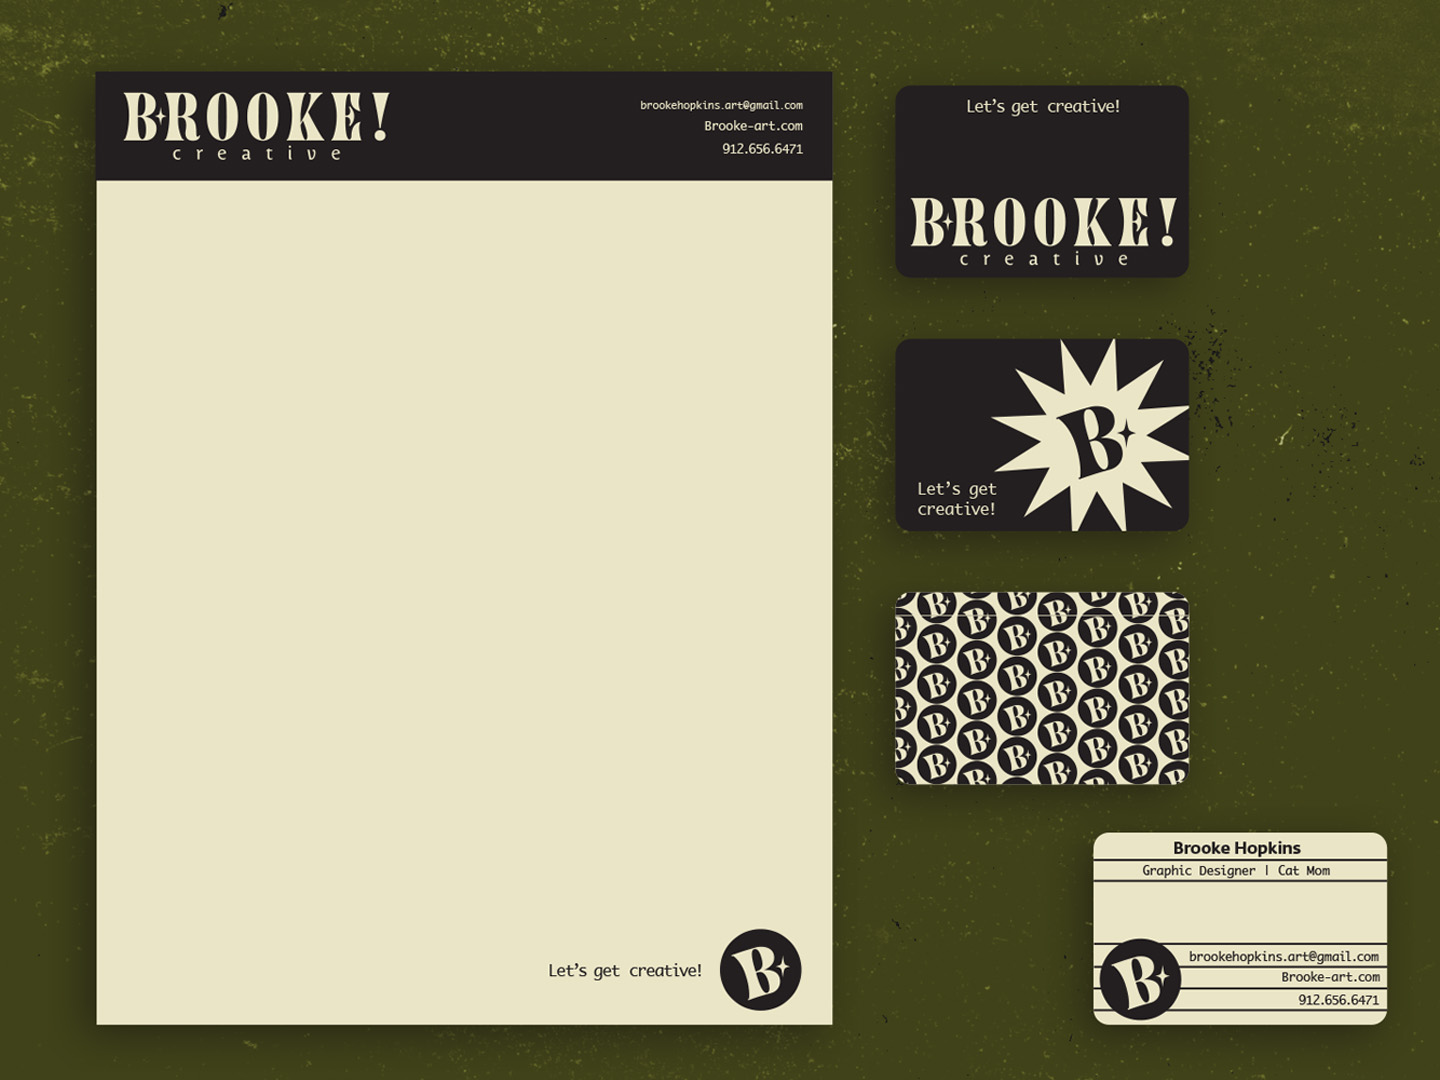  / "Brooke Creative" Personal Brand Logo, digital, 2021. 